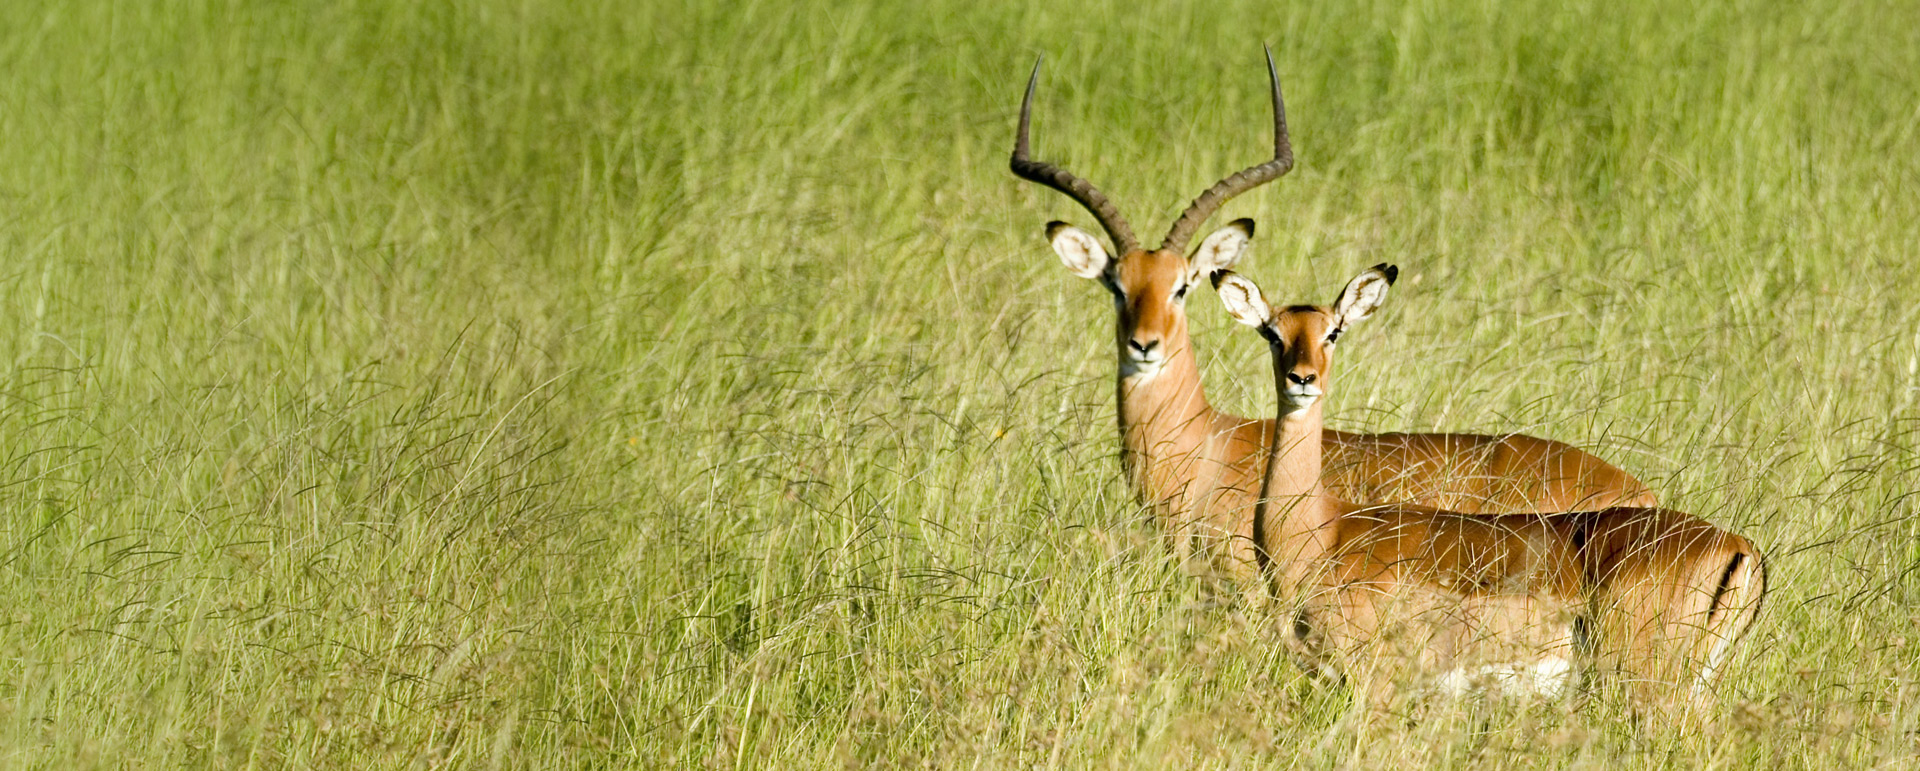 An impala in the african savana